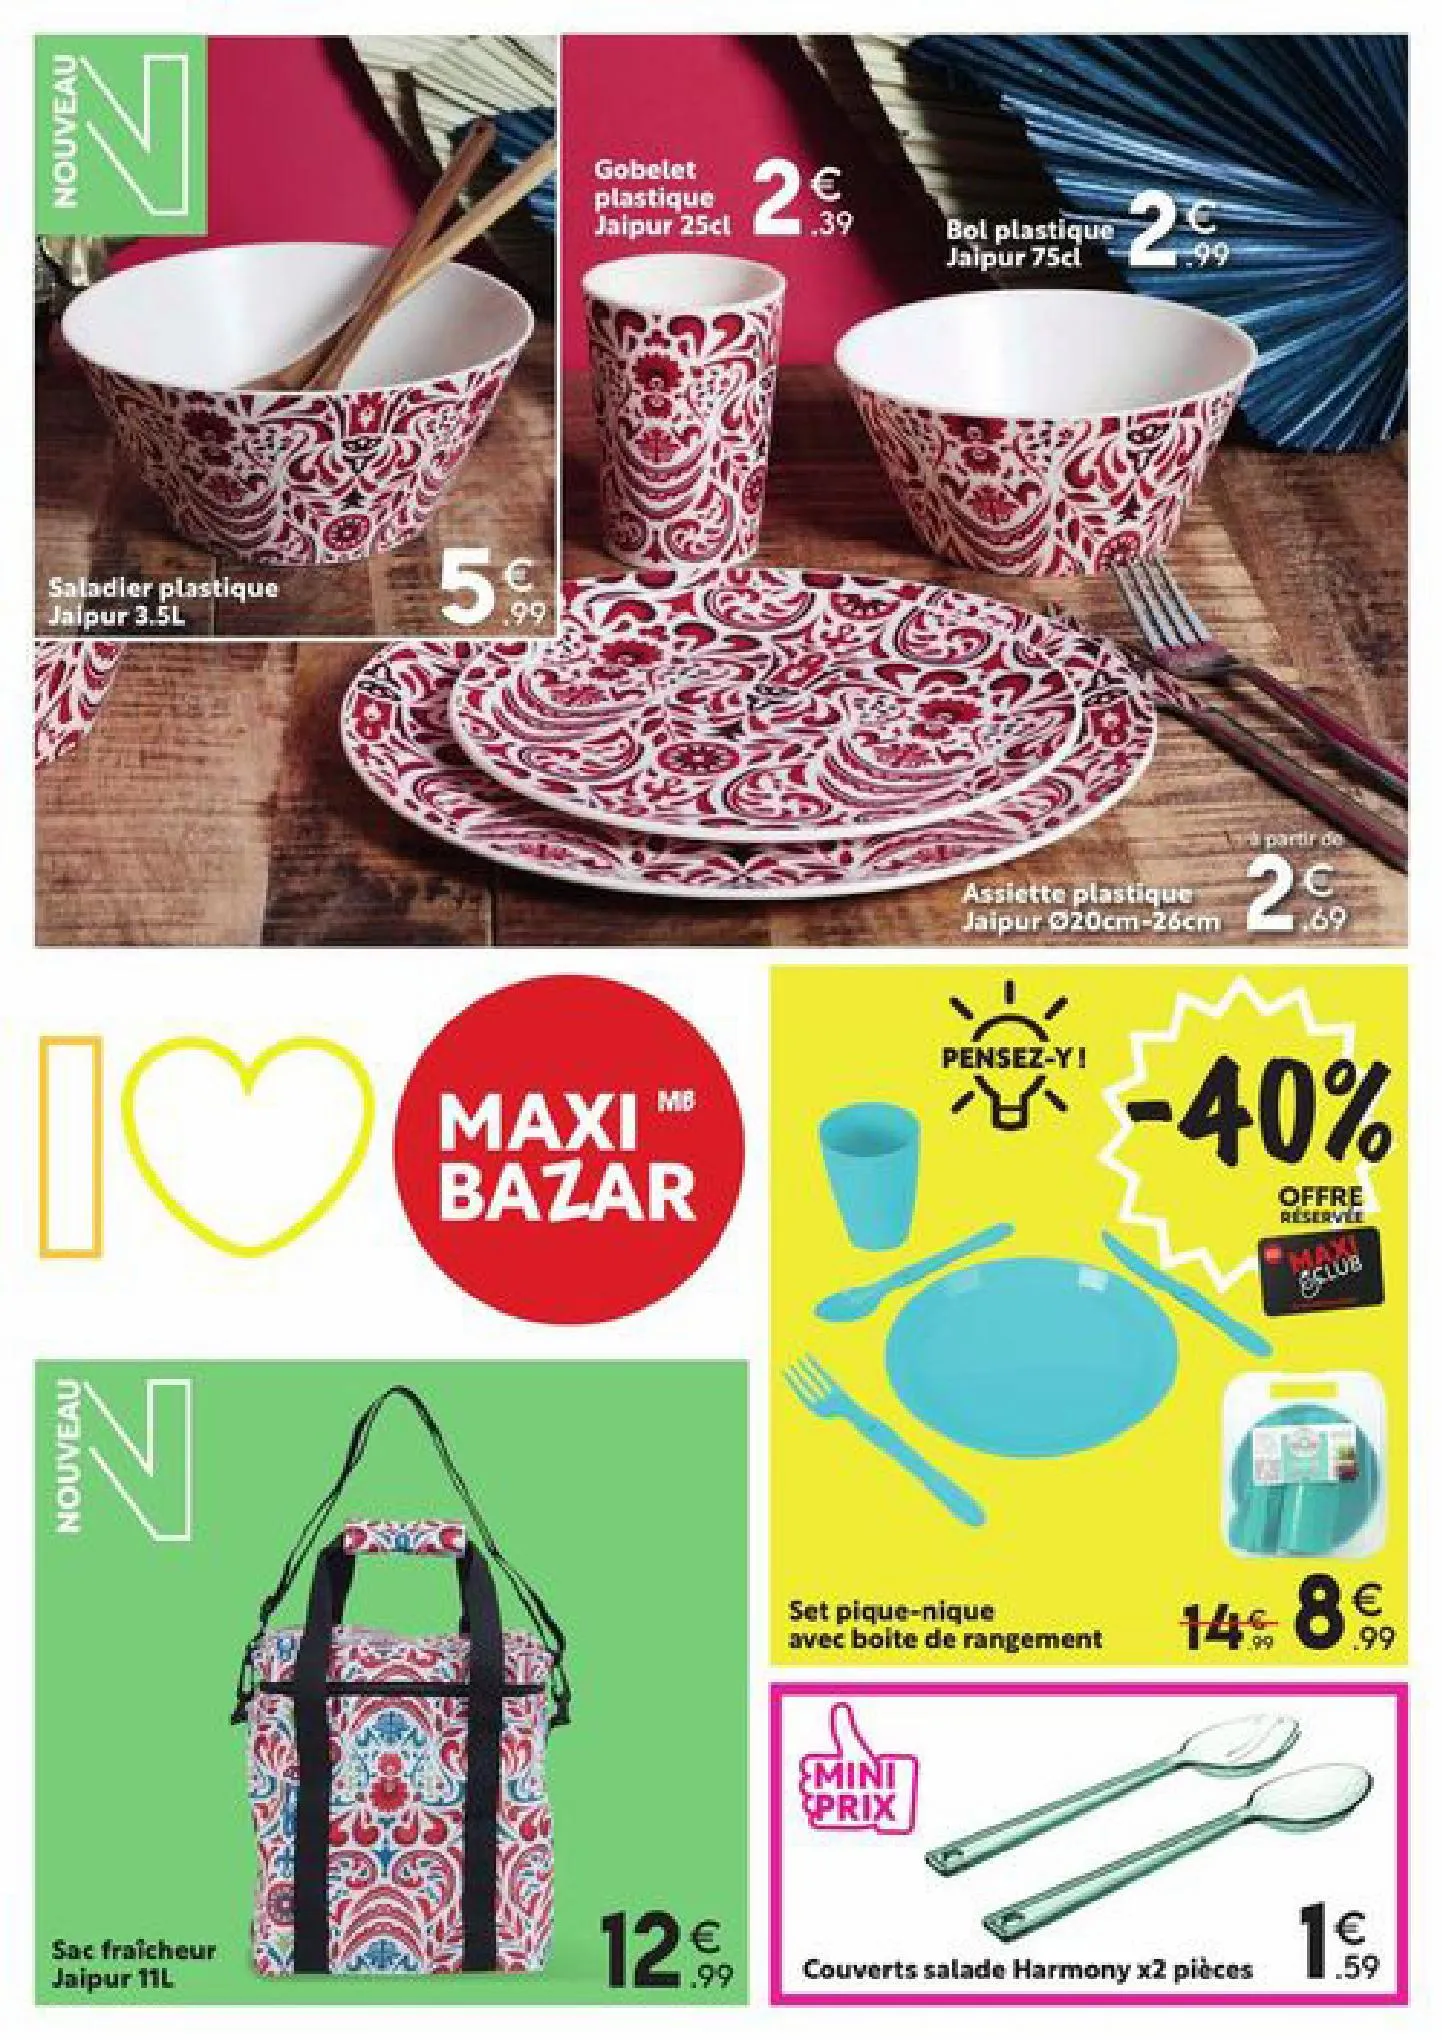 Catalogue Maxi Bazar Offres, page 00005